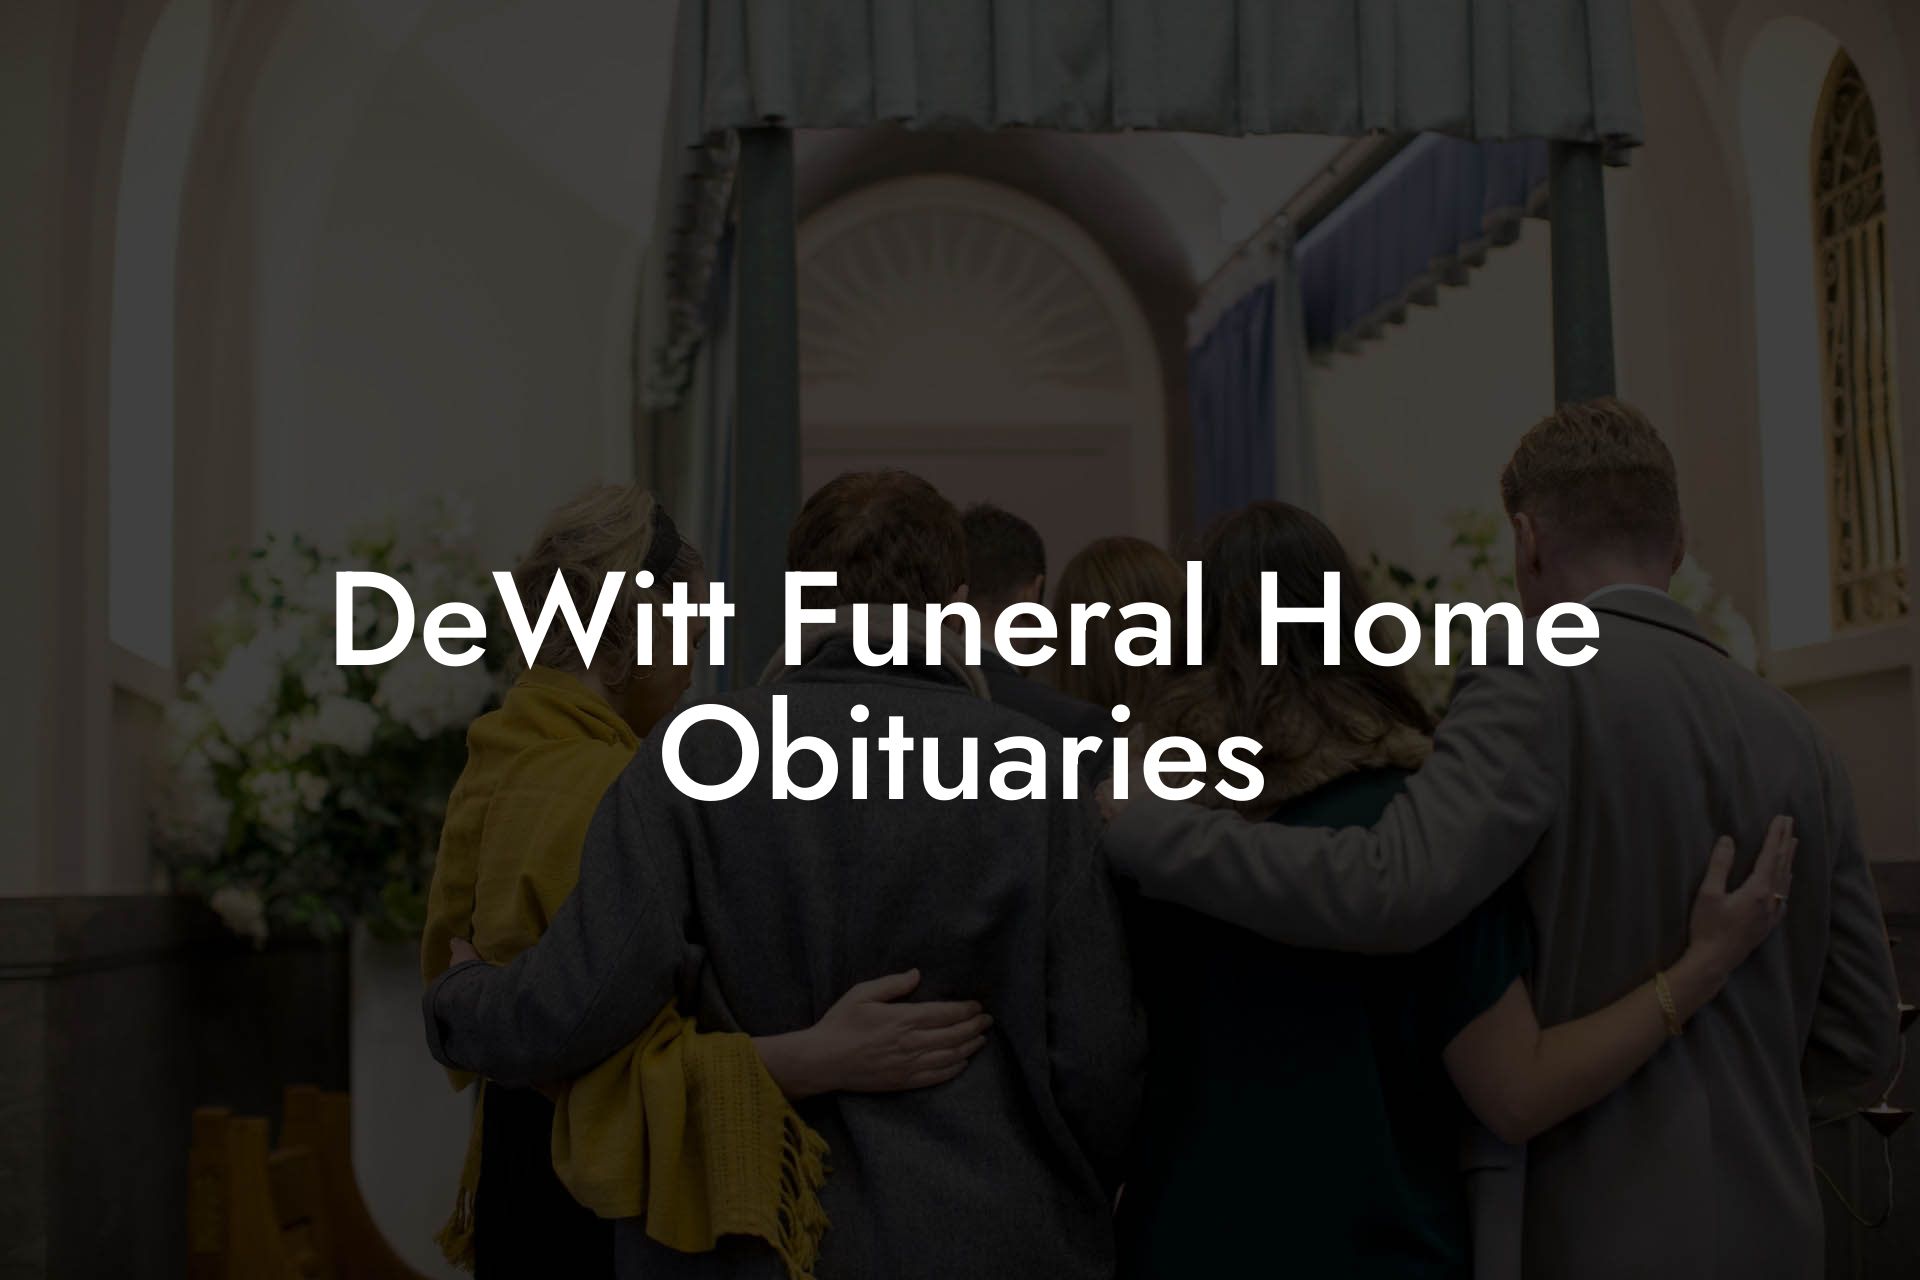 DeWitt Funeral Home Obituaries